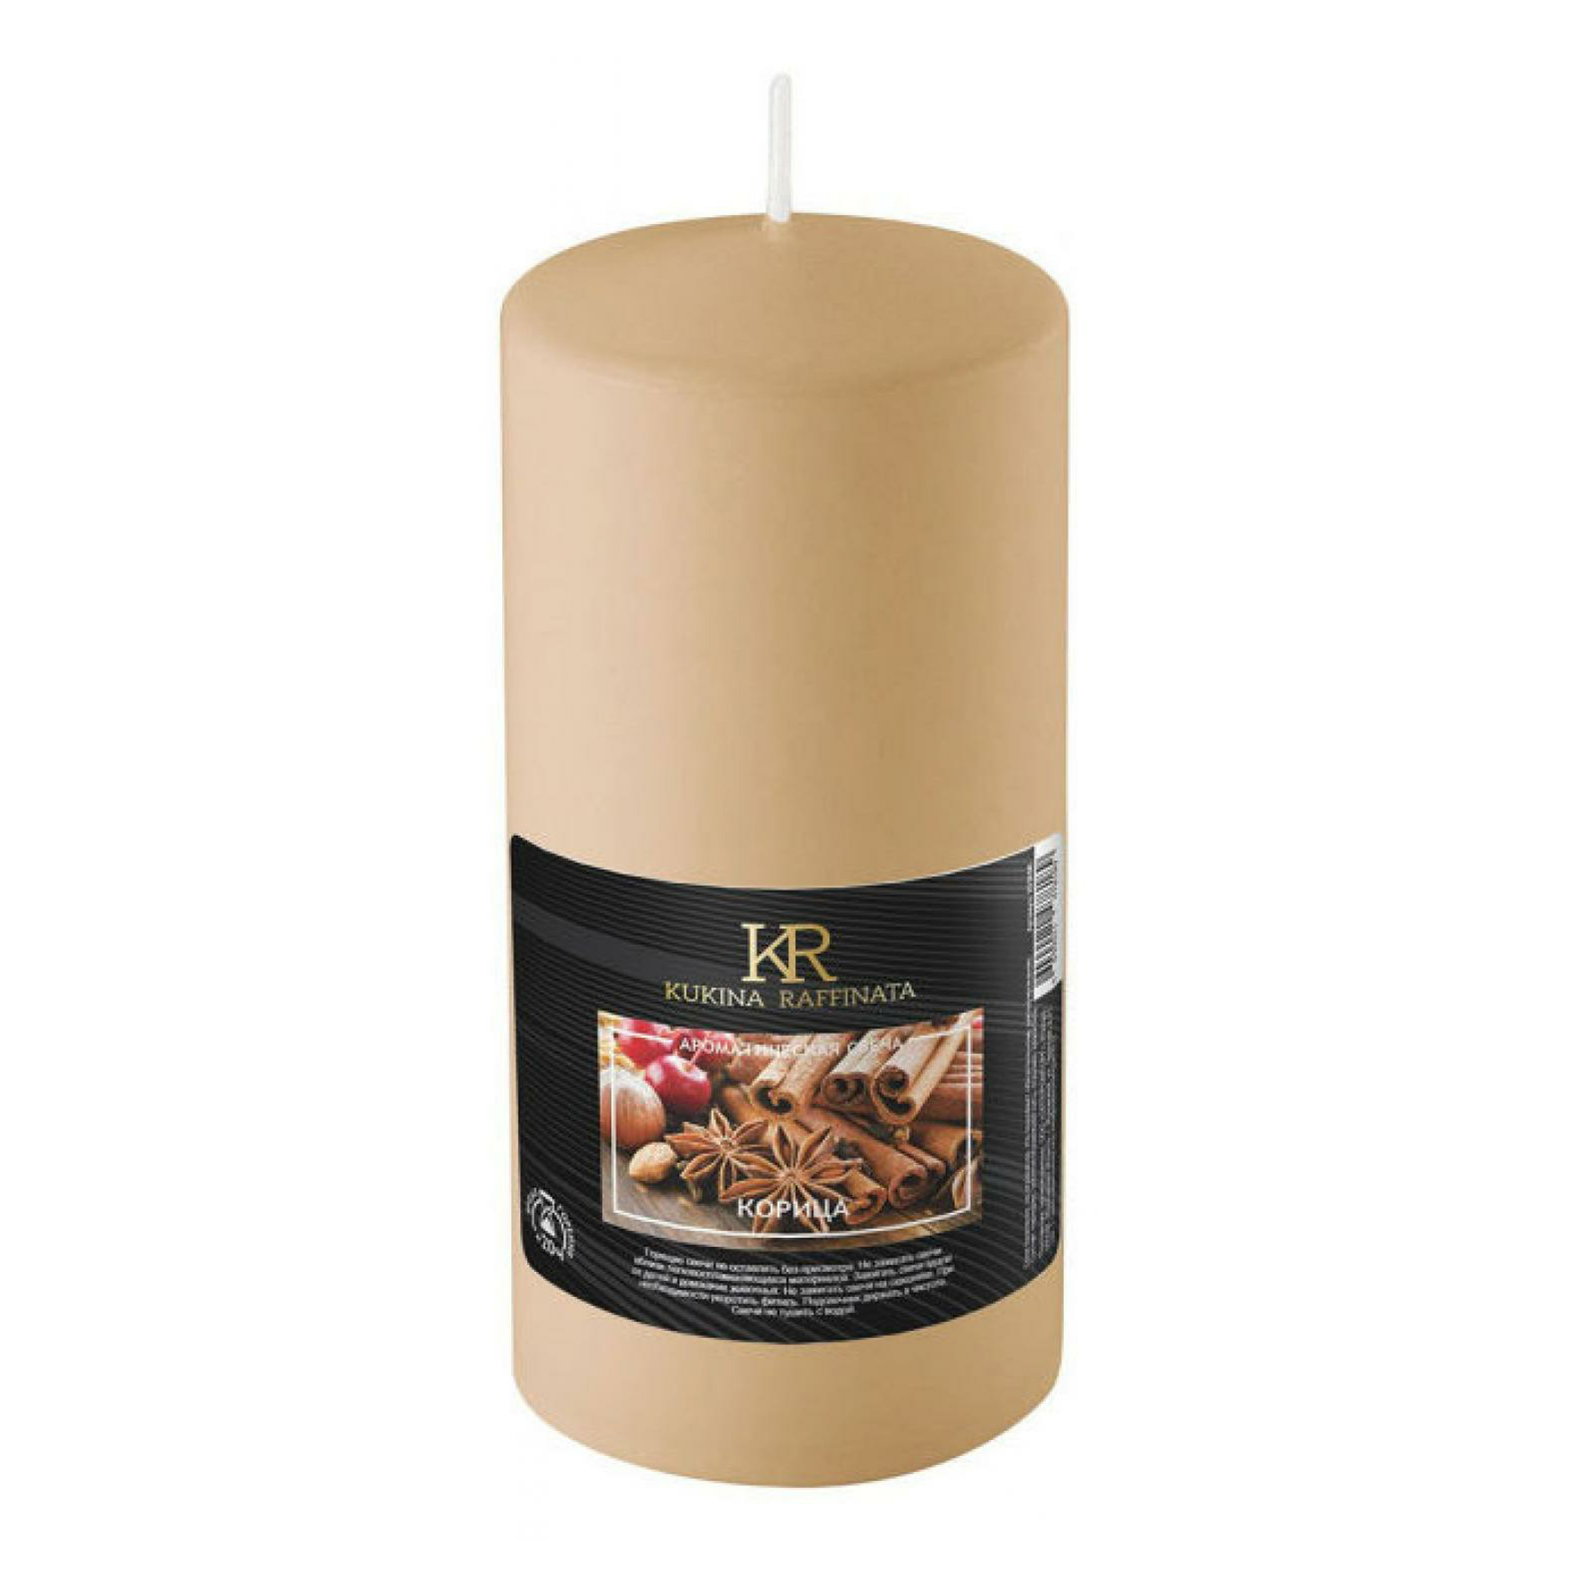 фото Свеча-столб ароматическая kukina raffinata корица 12 см